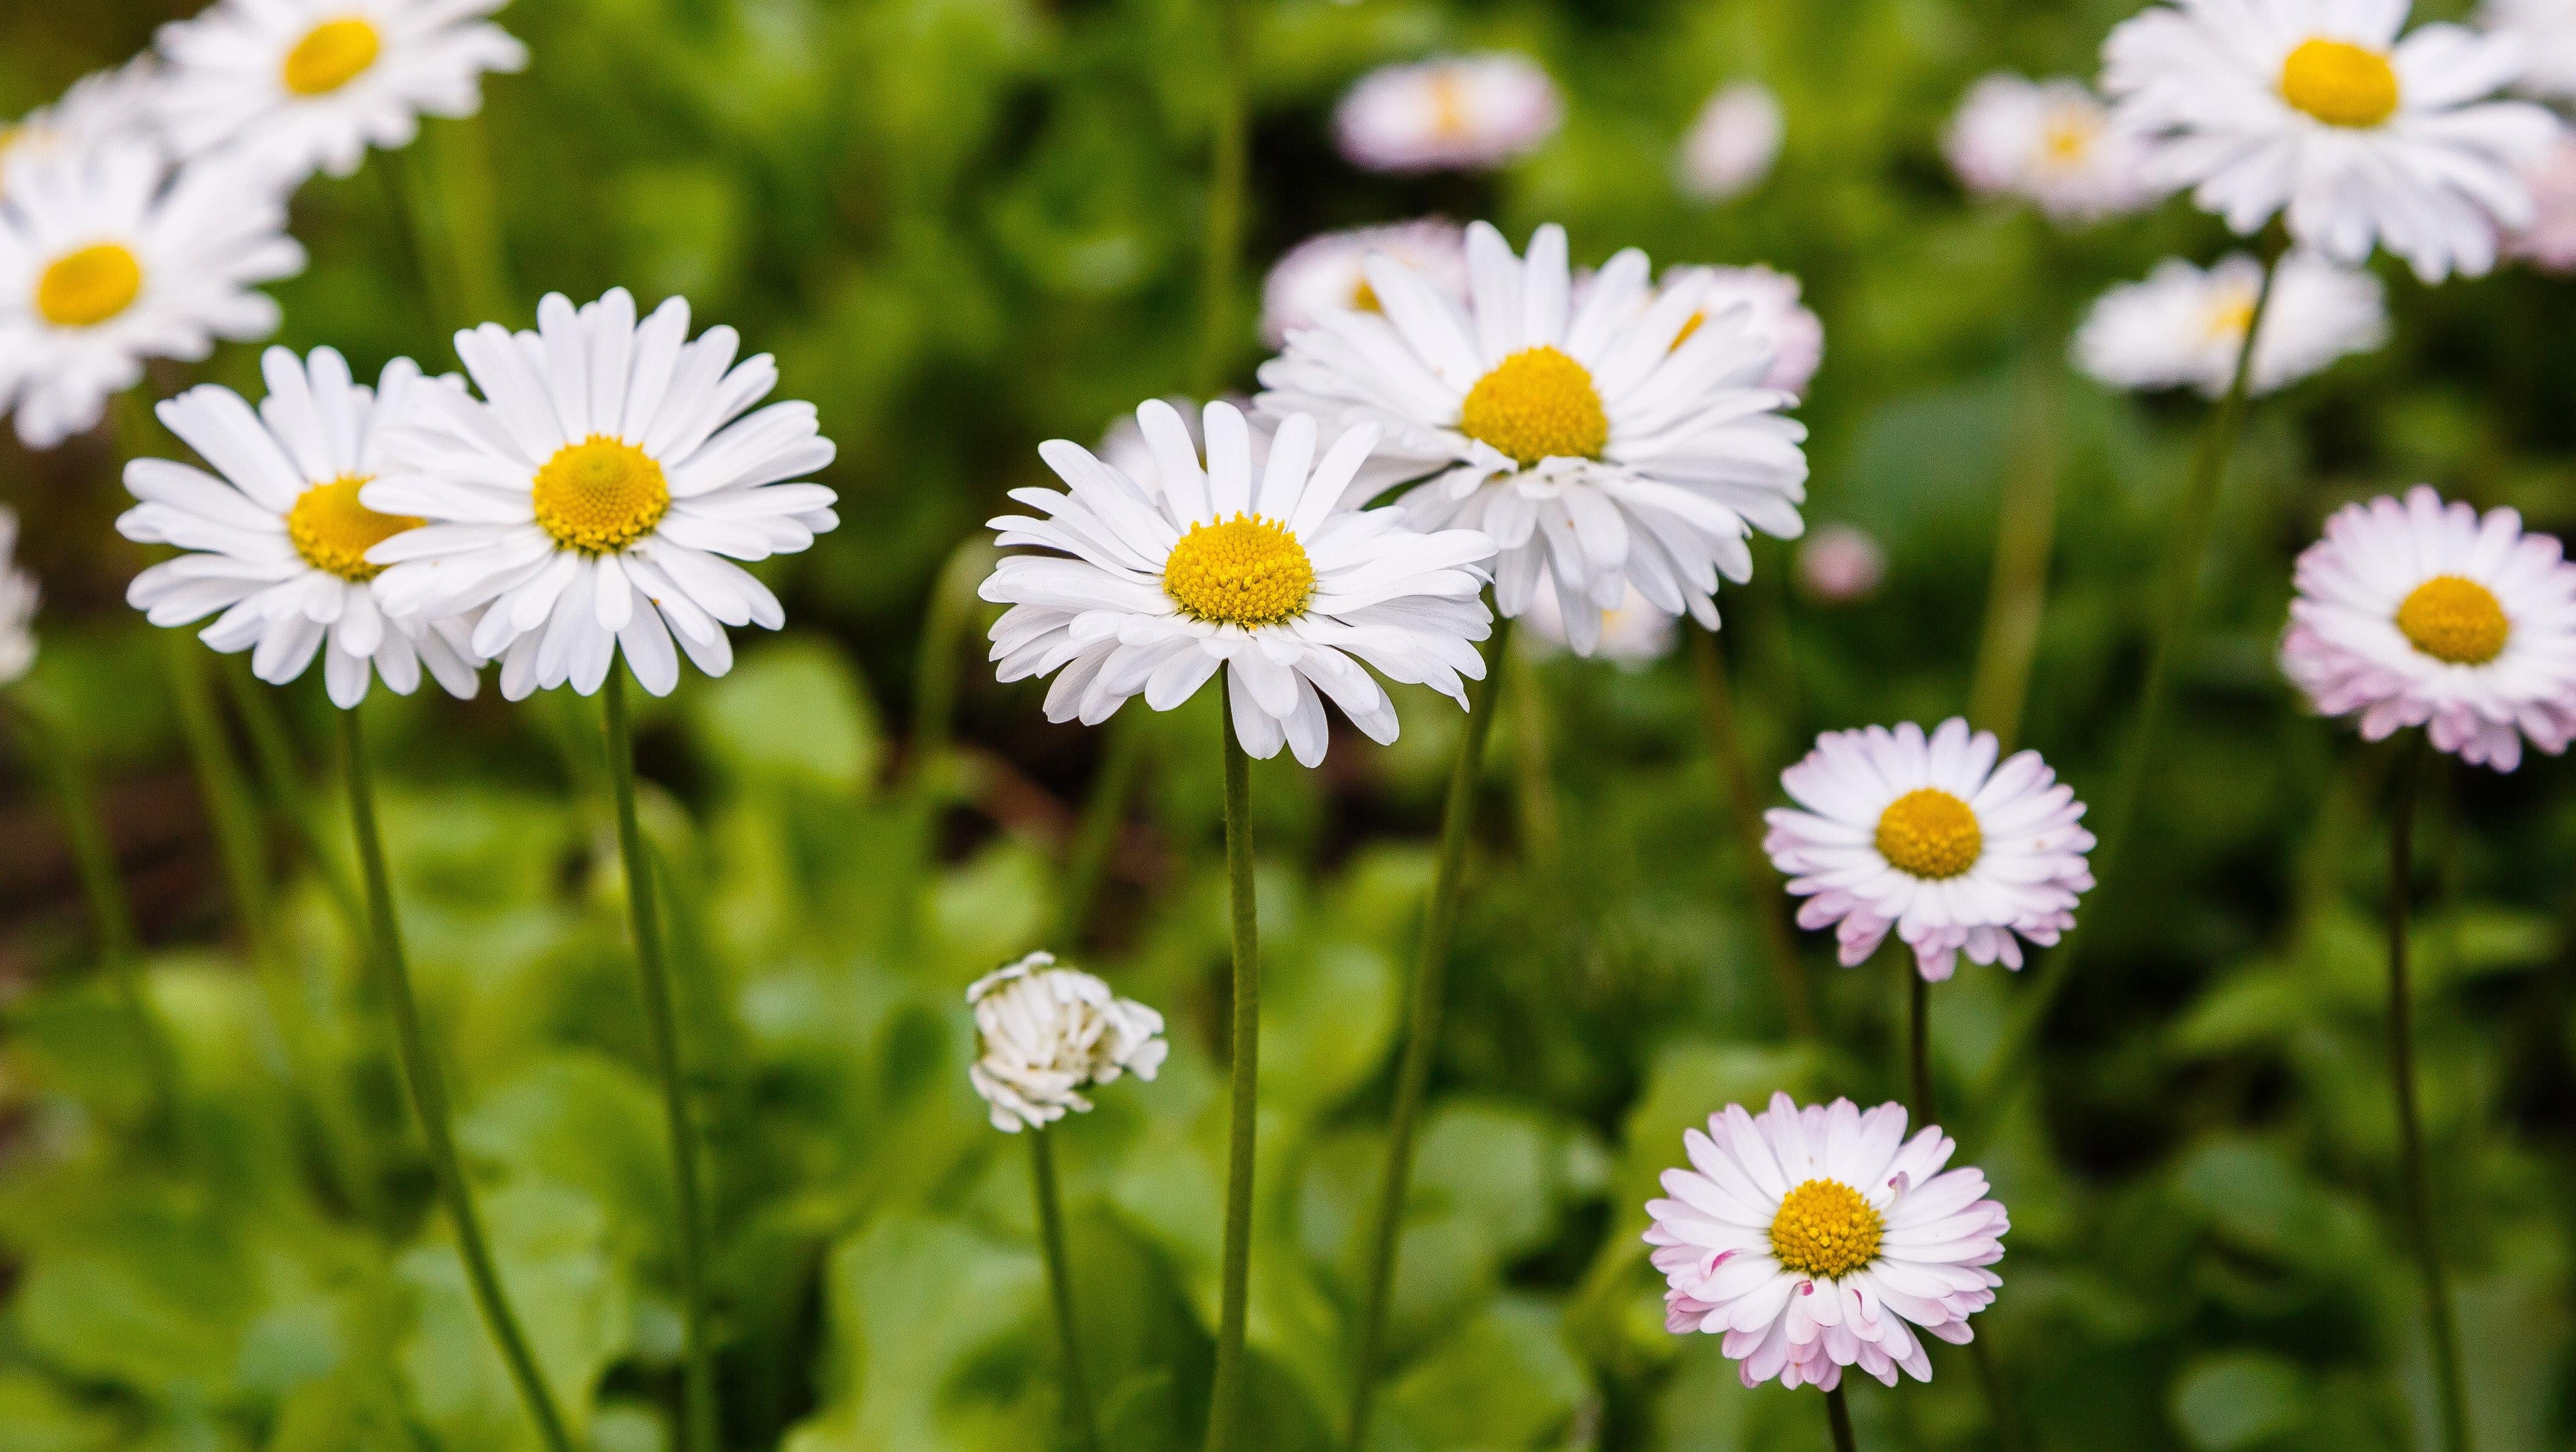 Photo: Flower_Garden, Shutterstock